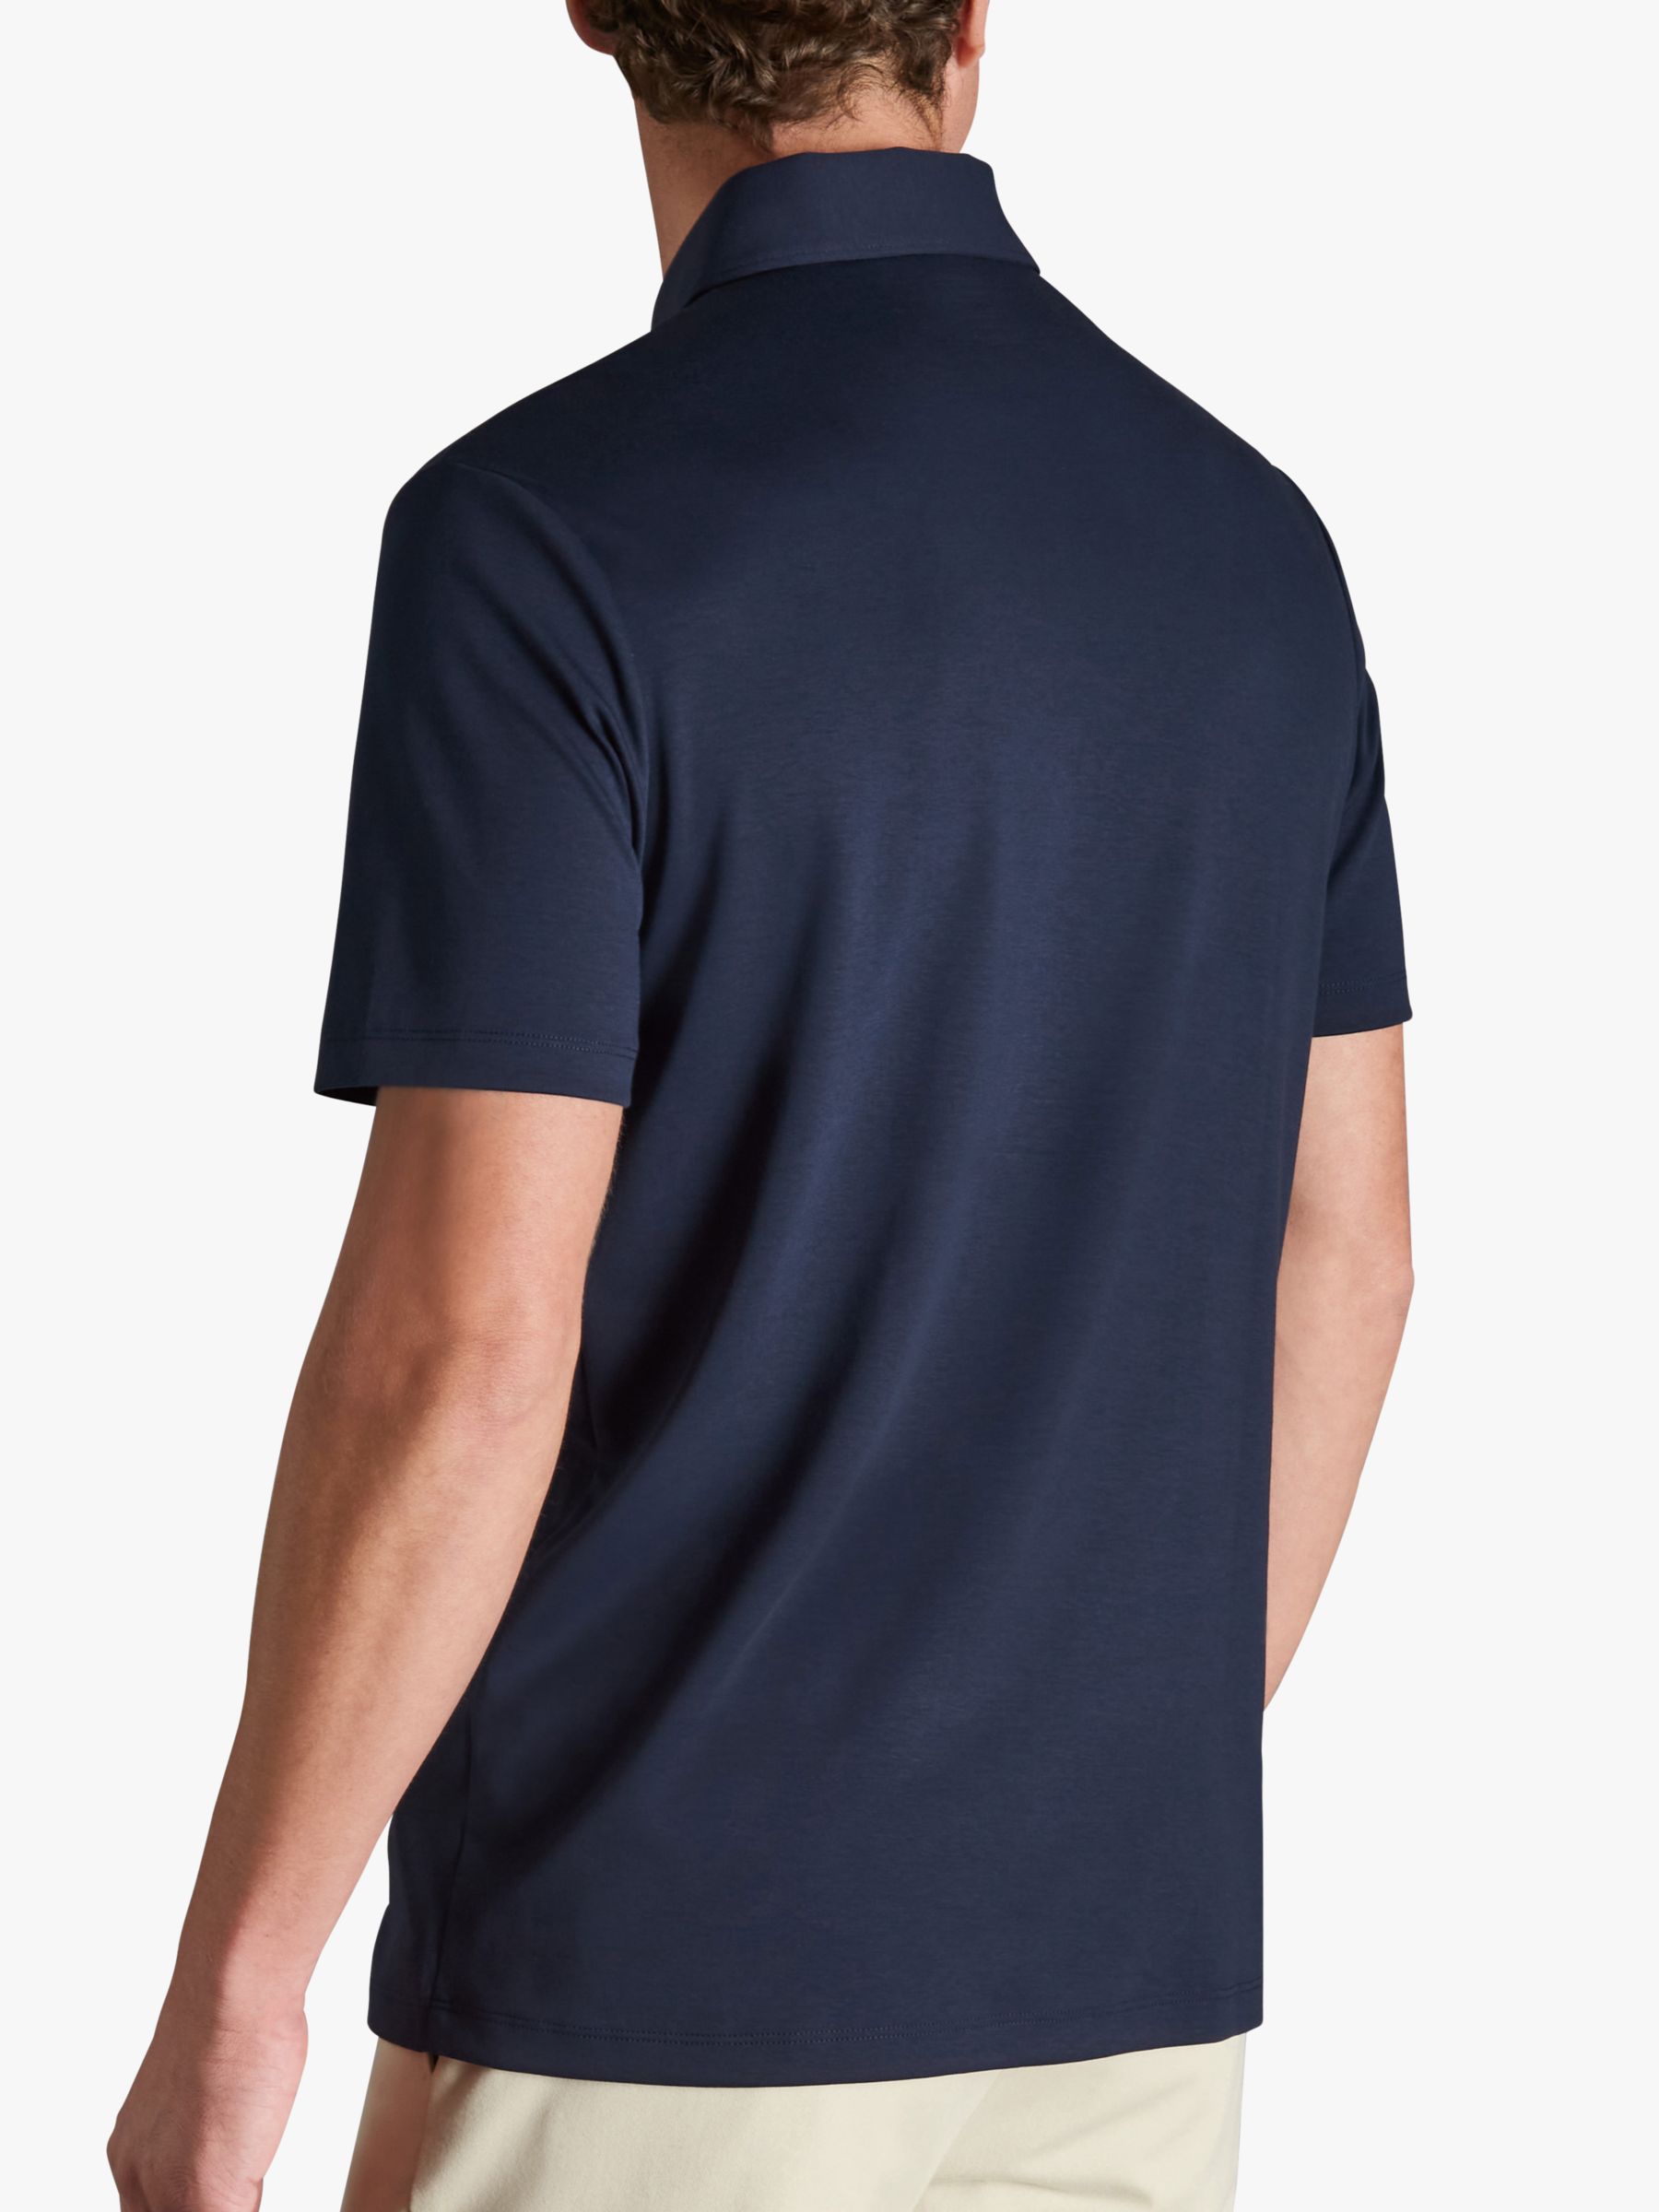 Charles Tyrwhitt Zip Neck Jersey Polo Shirt, Navy at John Lewis & Partners